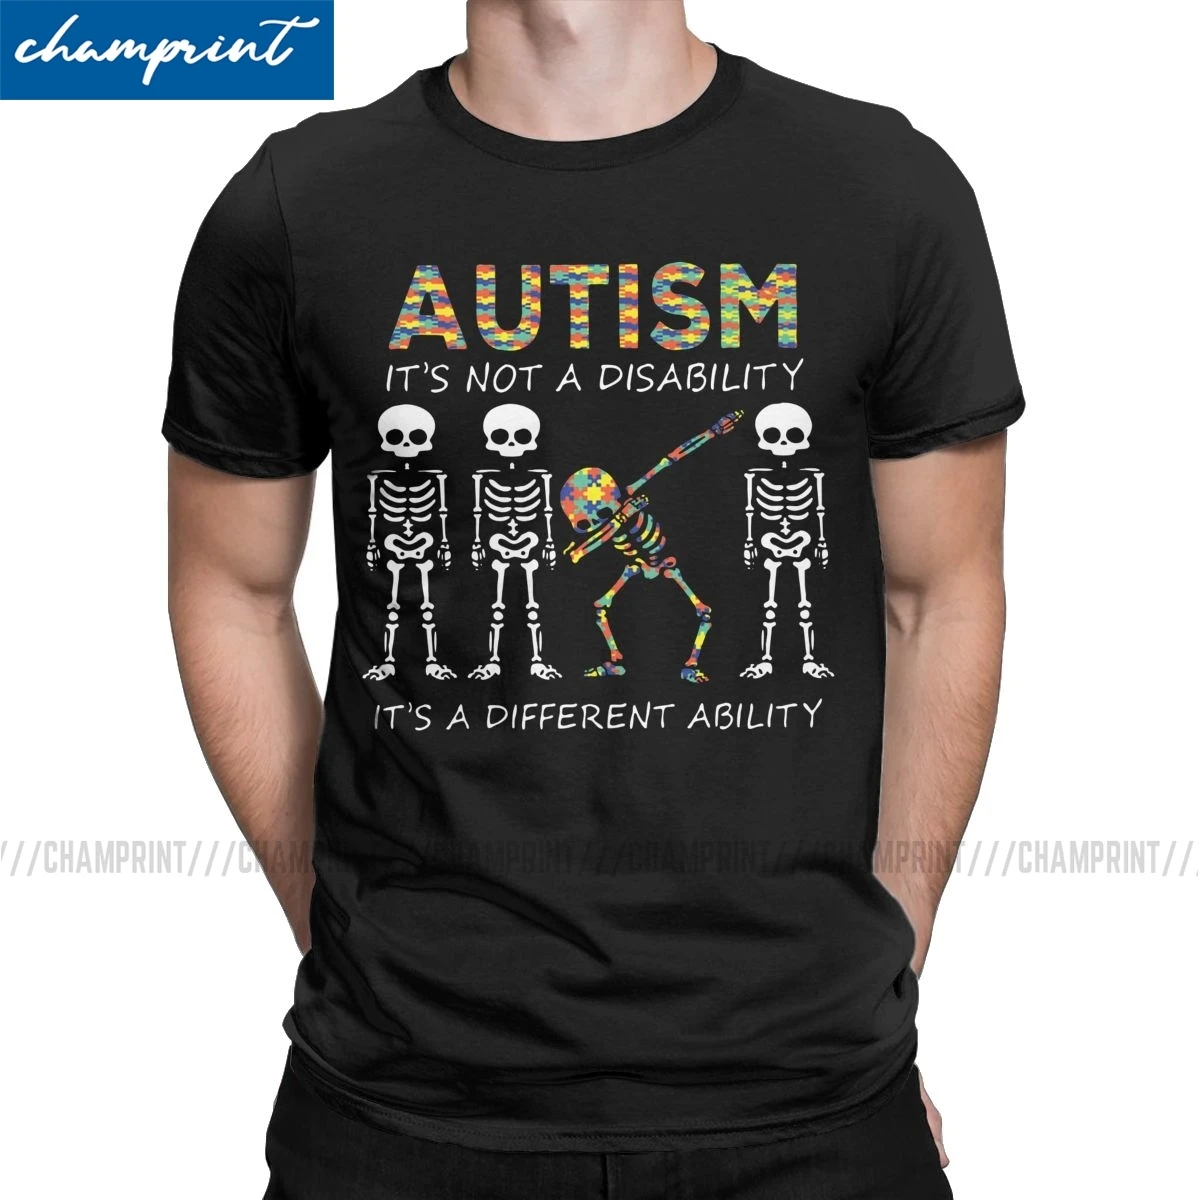 Skeleton Autism Shirt Autism It's Not A Disability It's A Different Ability Autism Shirt Autism Awareness Shirt Autism Support Tee